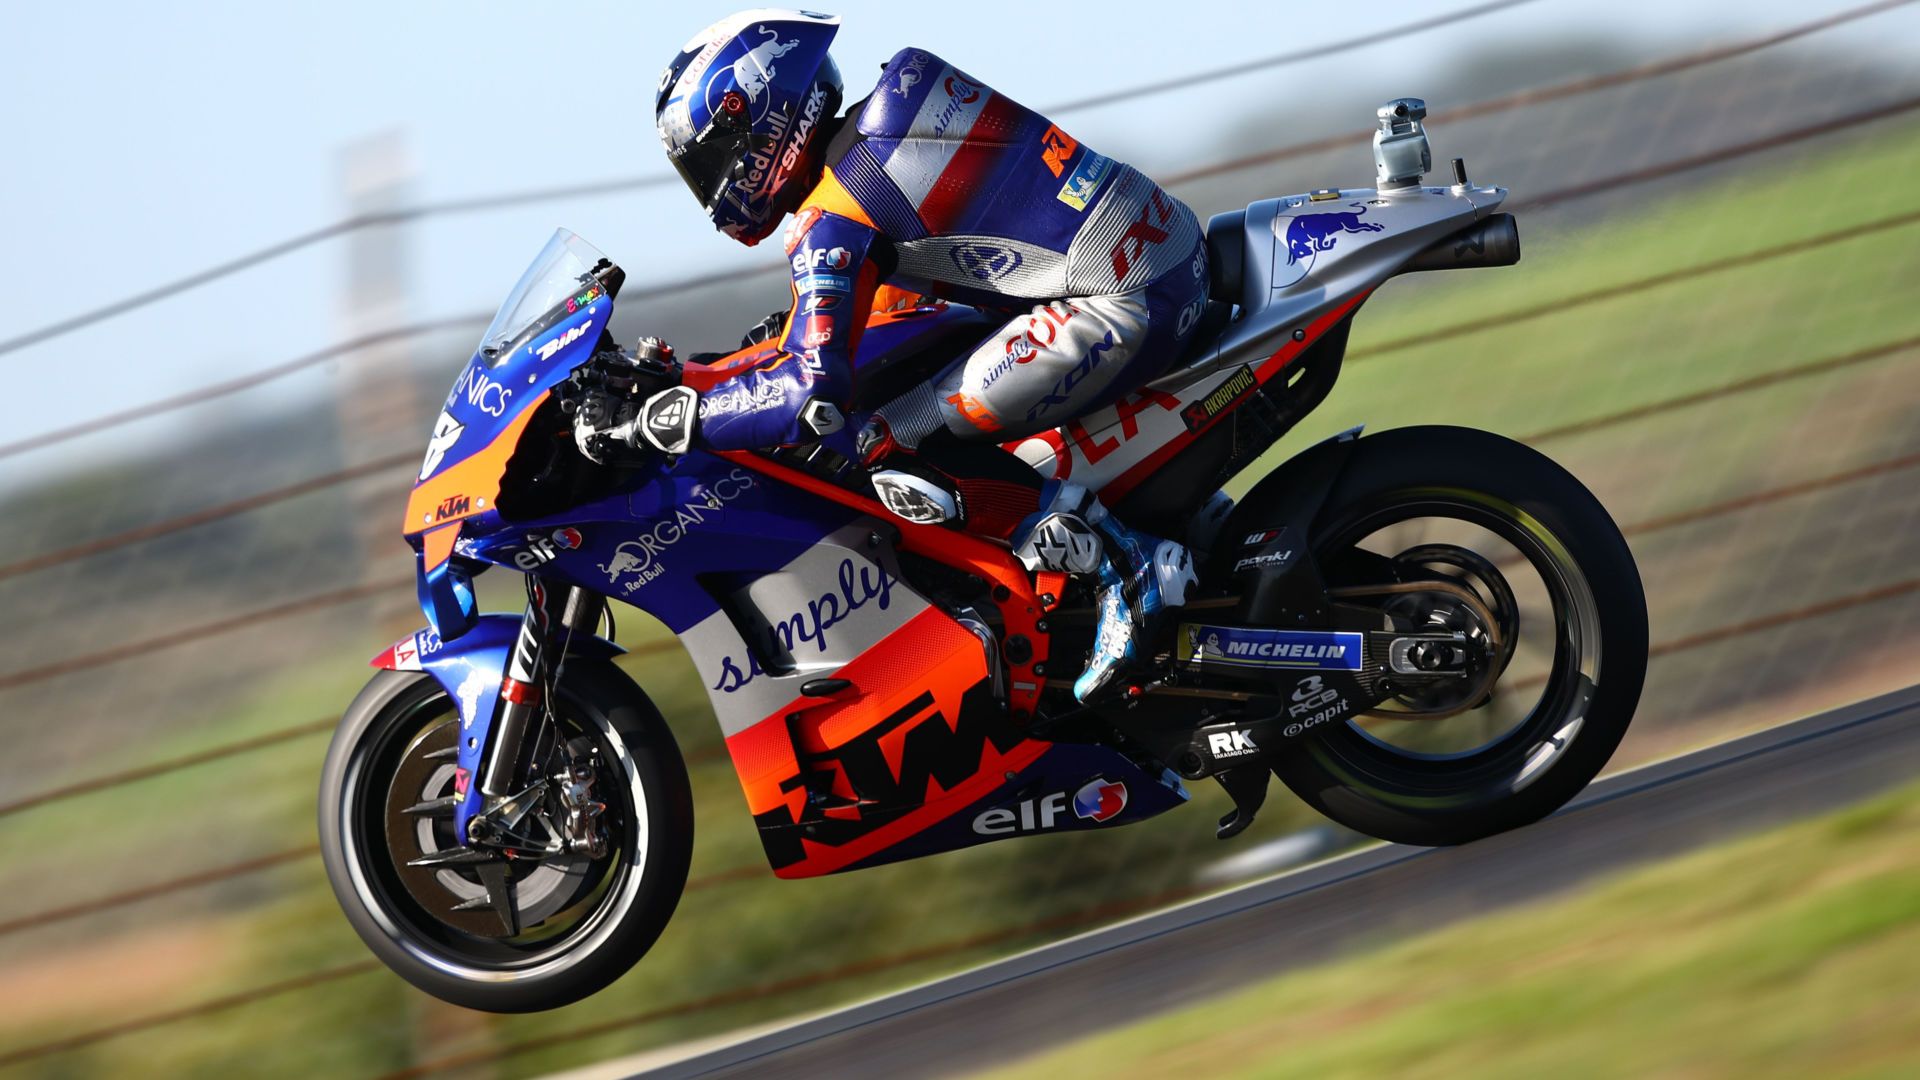 MotoGP: Oliveira Captures Pole Position At Portimao World Magazine. Motorcycle Riding, Racing & Tech News